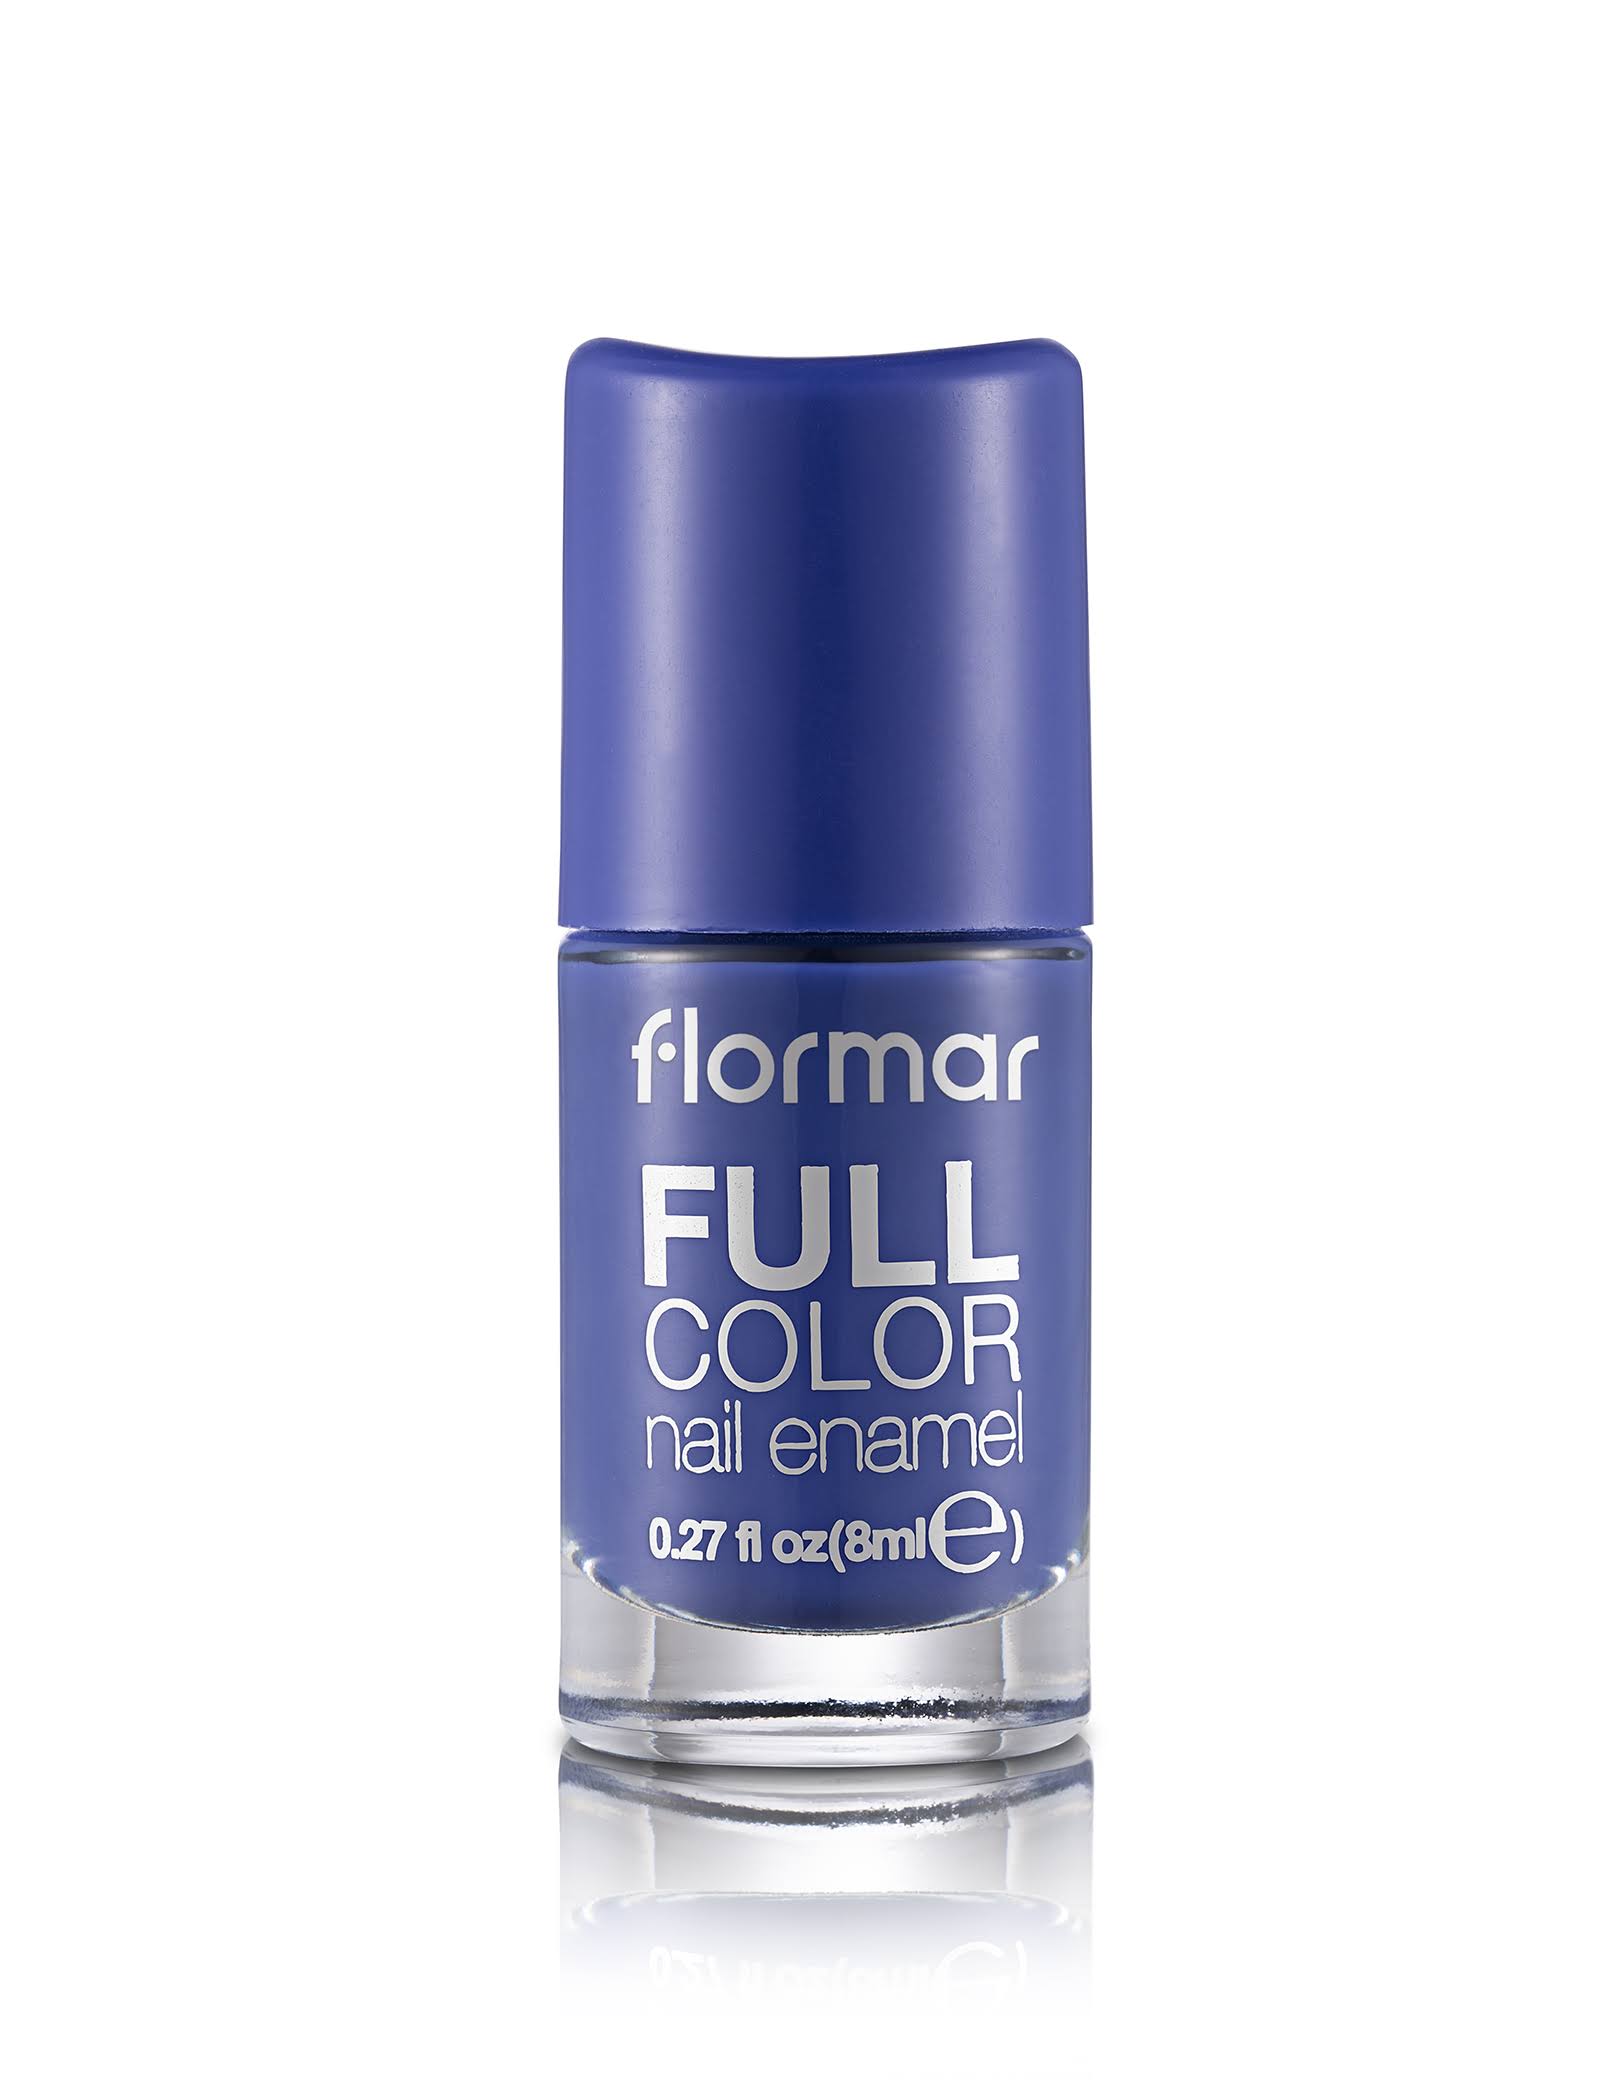 Flormar Full Color Nail Polish - Fc17, .27oz